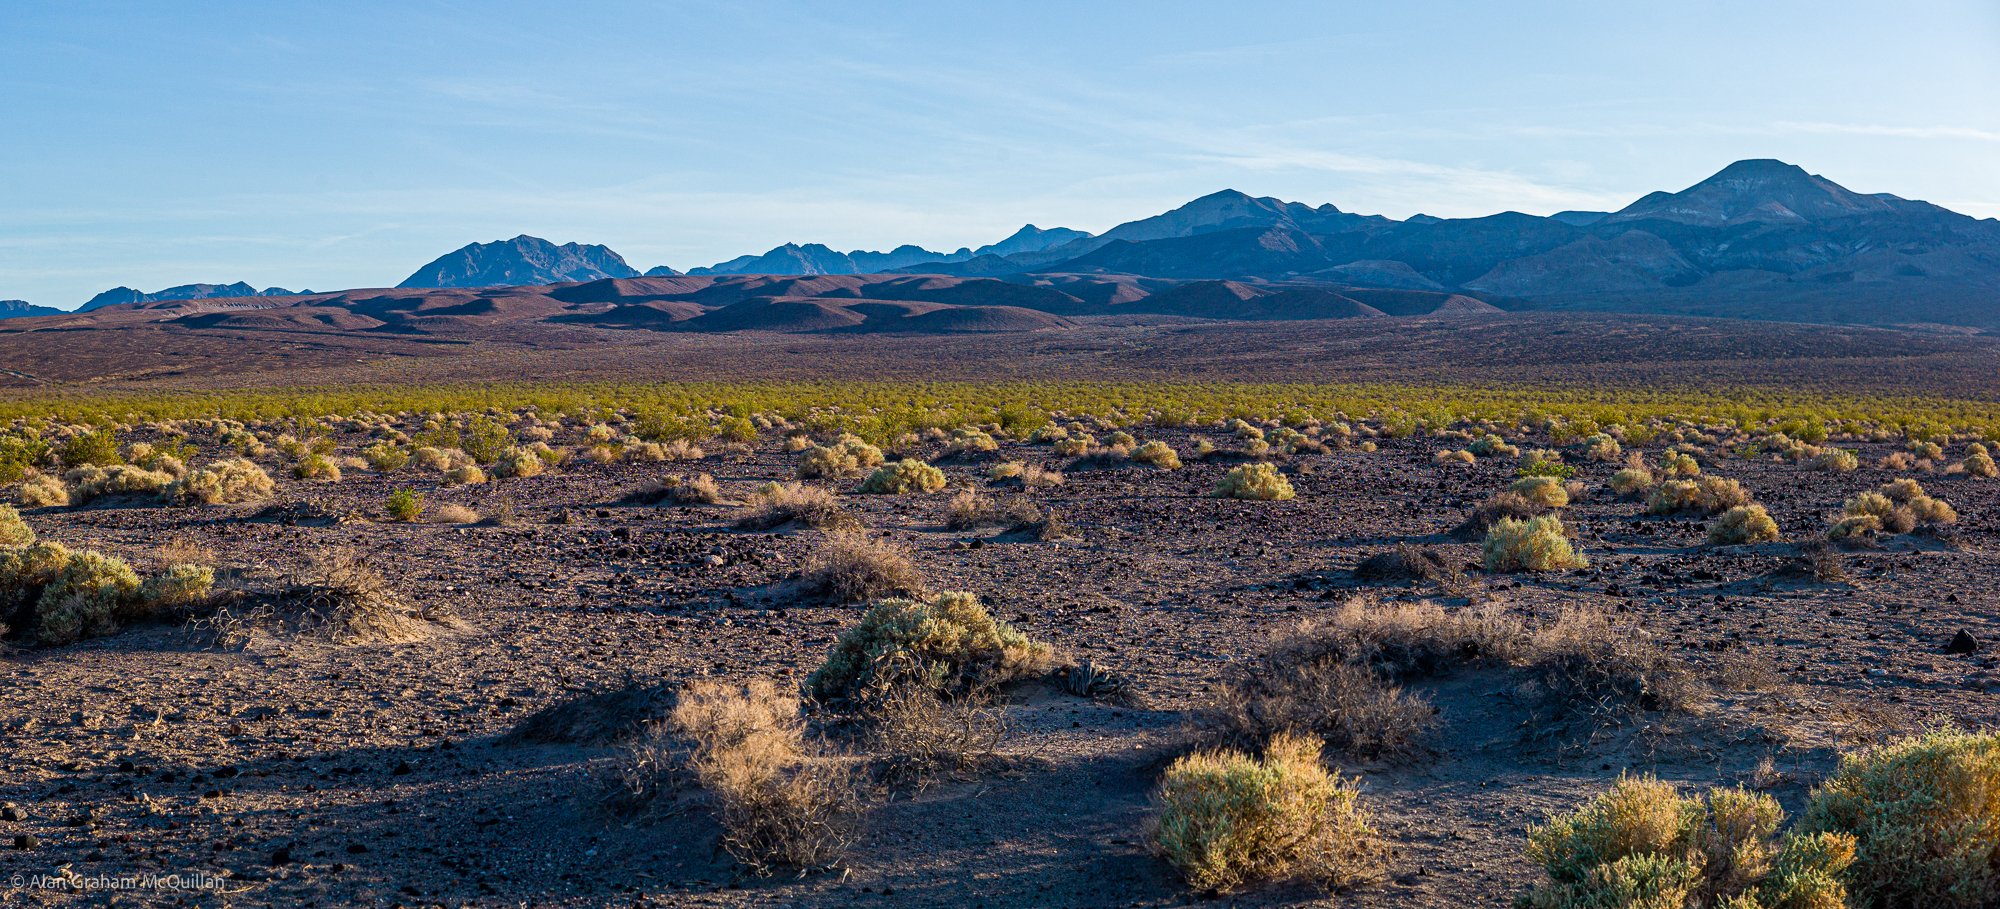 Panamint Range, Death Valley National Park, California